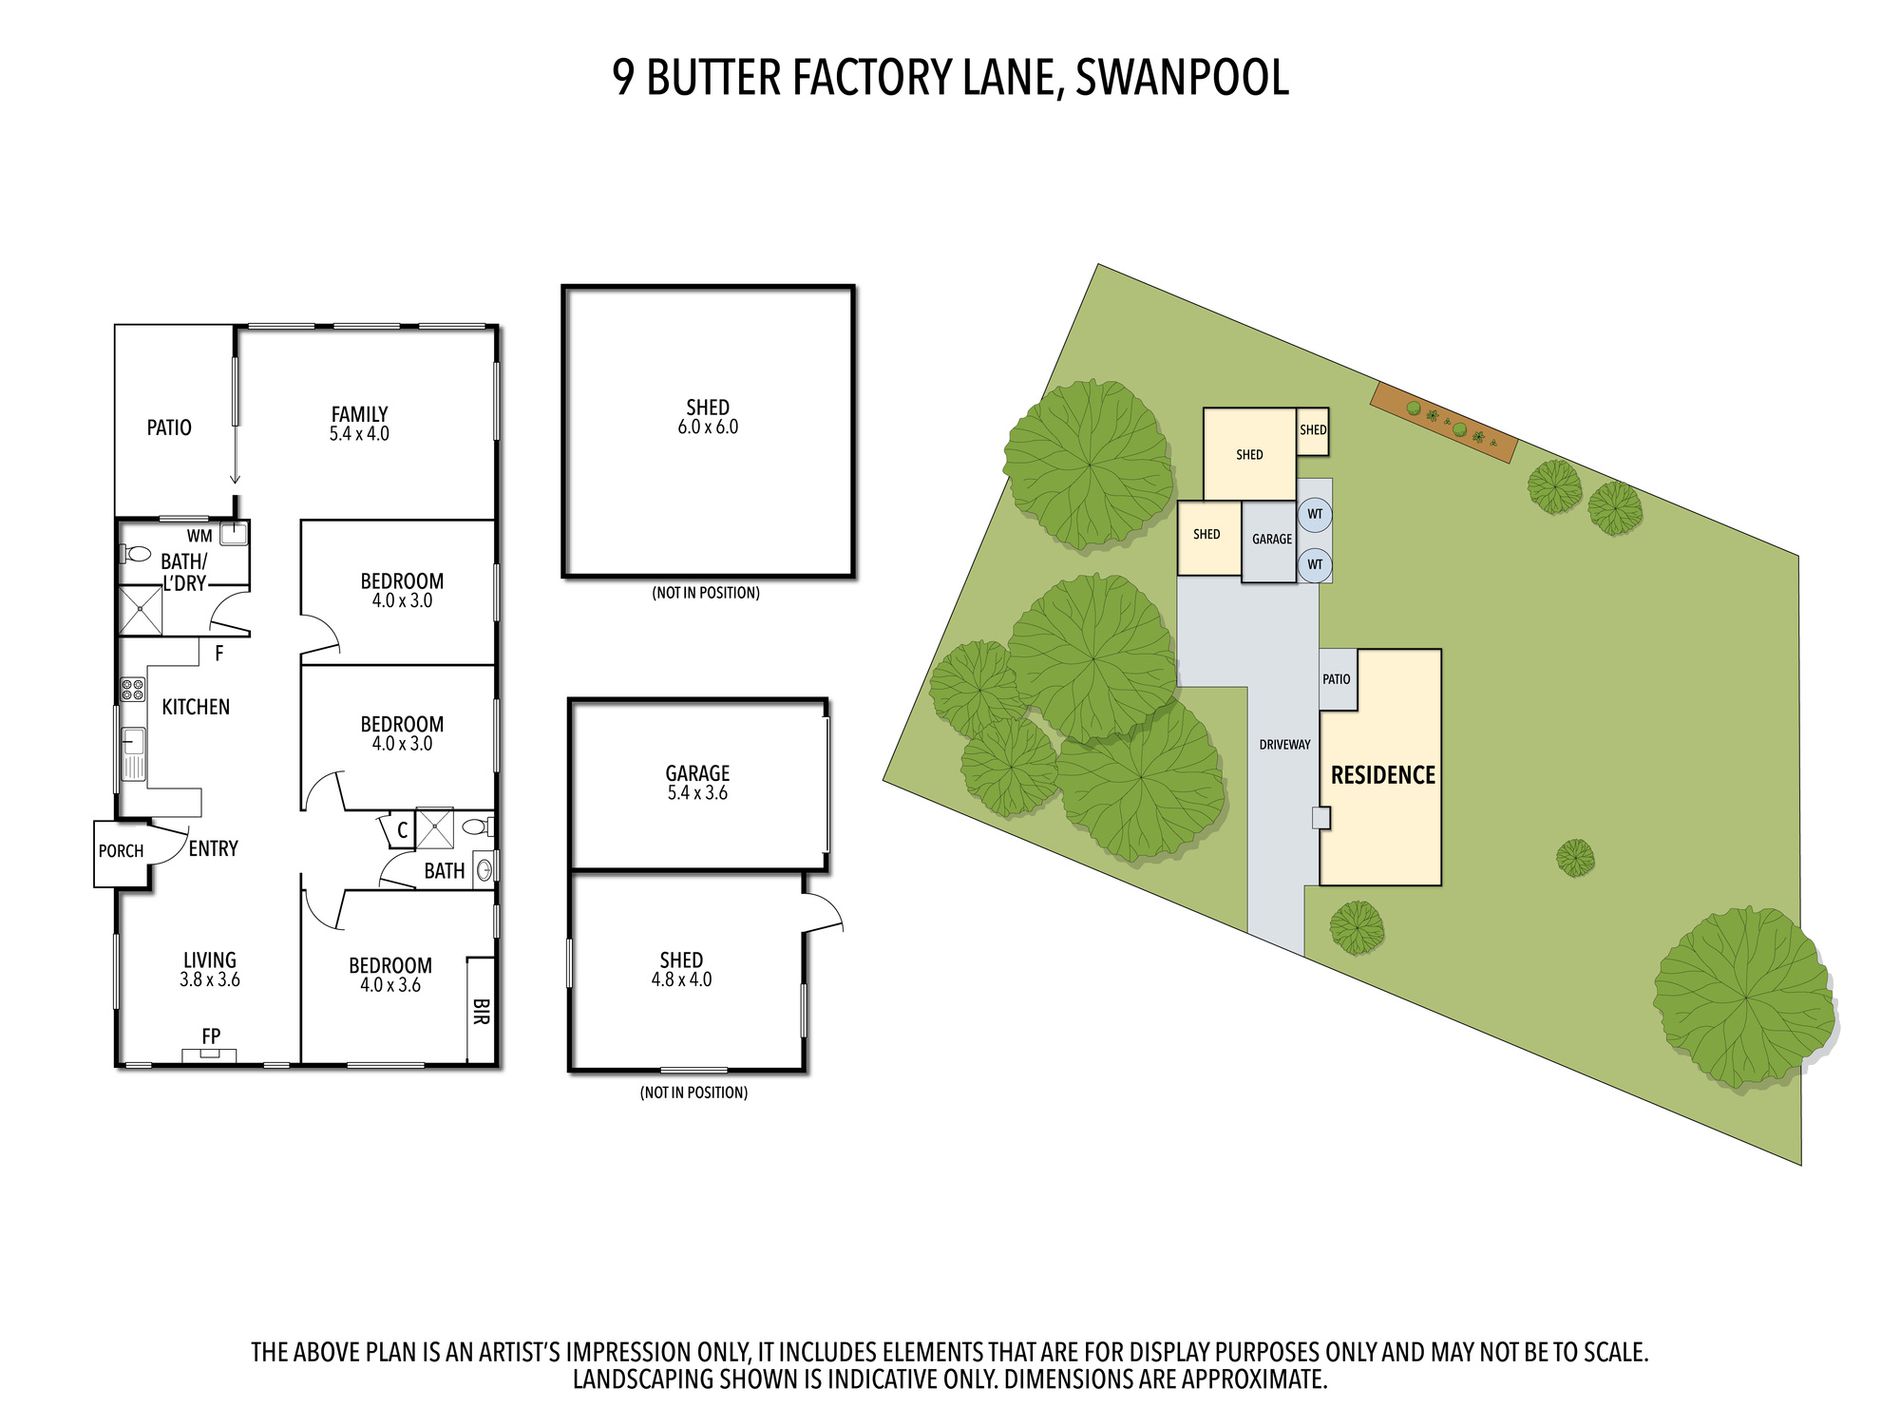 9 Butter Factory Lane, Swanpool